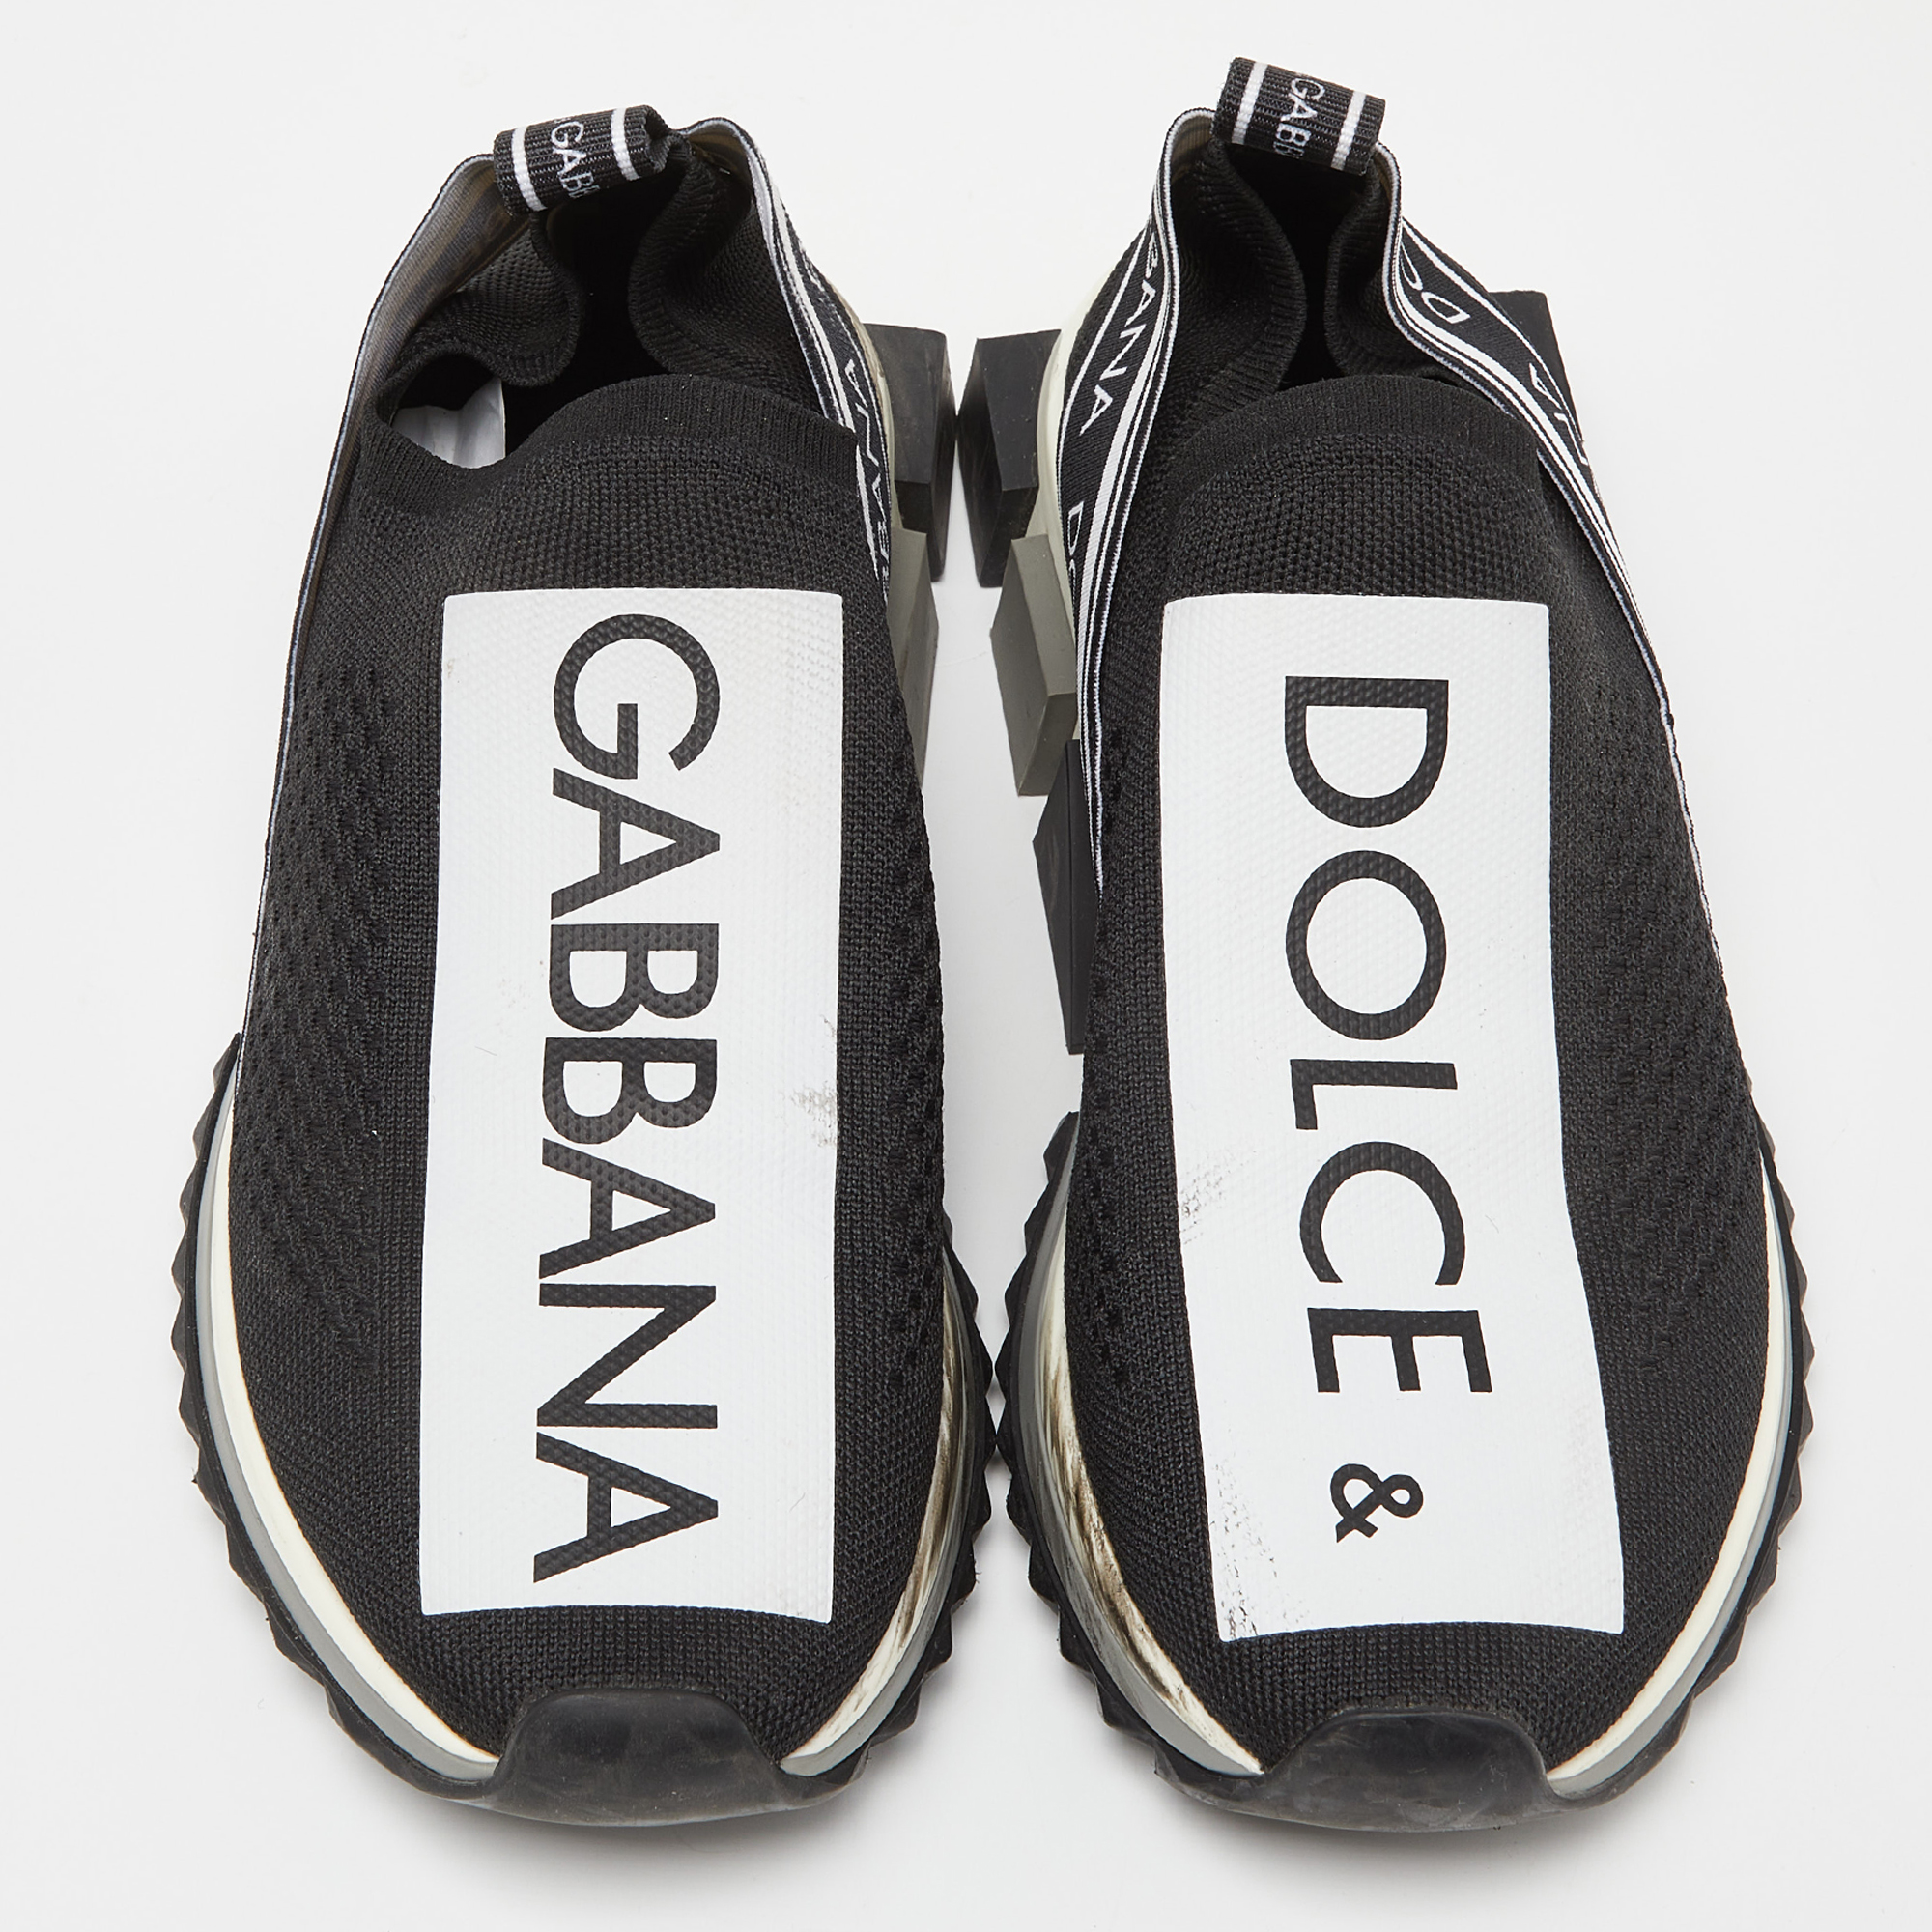 Dolce & Gabbana Black Knit Fabric Sorrento Sneakers Size 39.5